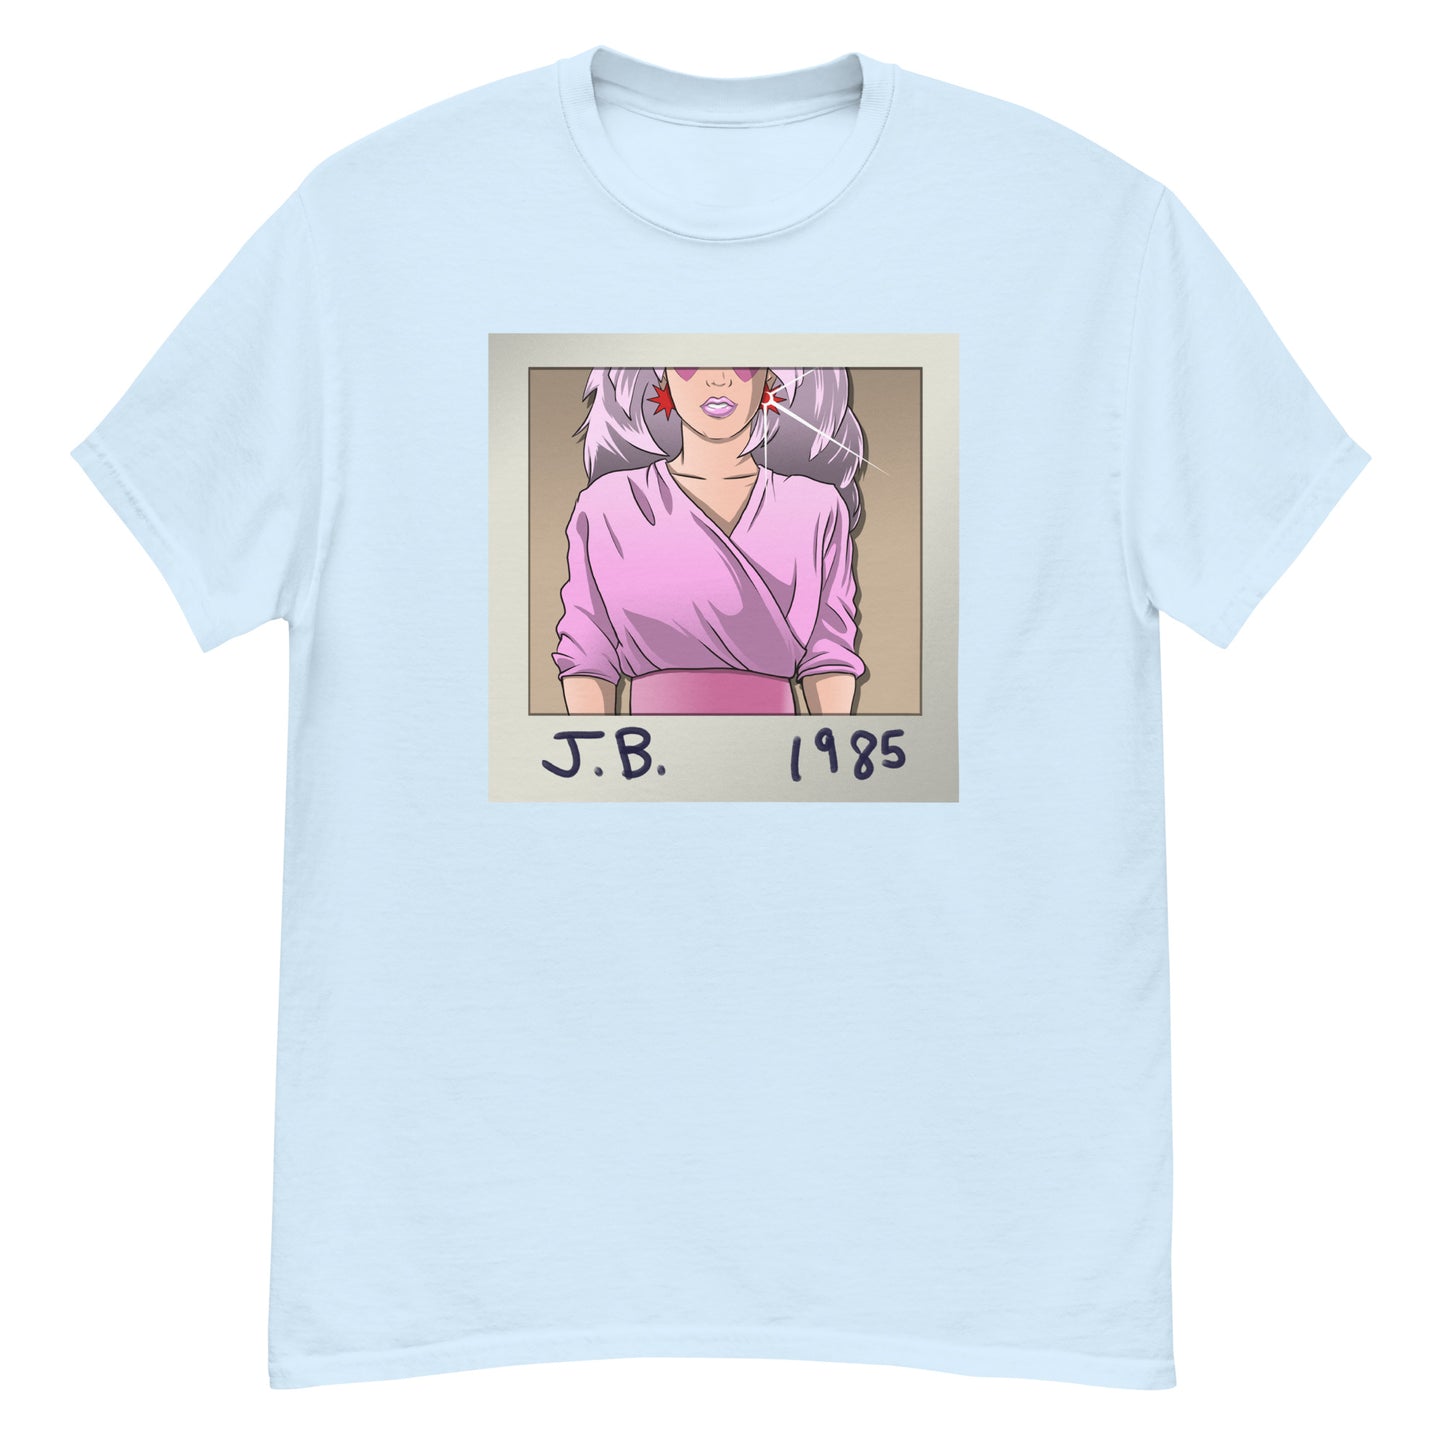 Jerrica Benton 1985 t-shirt